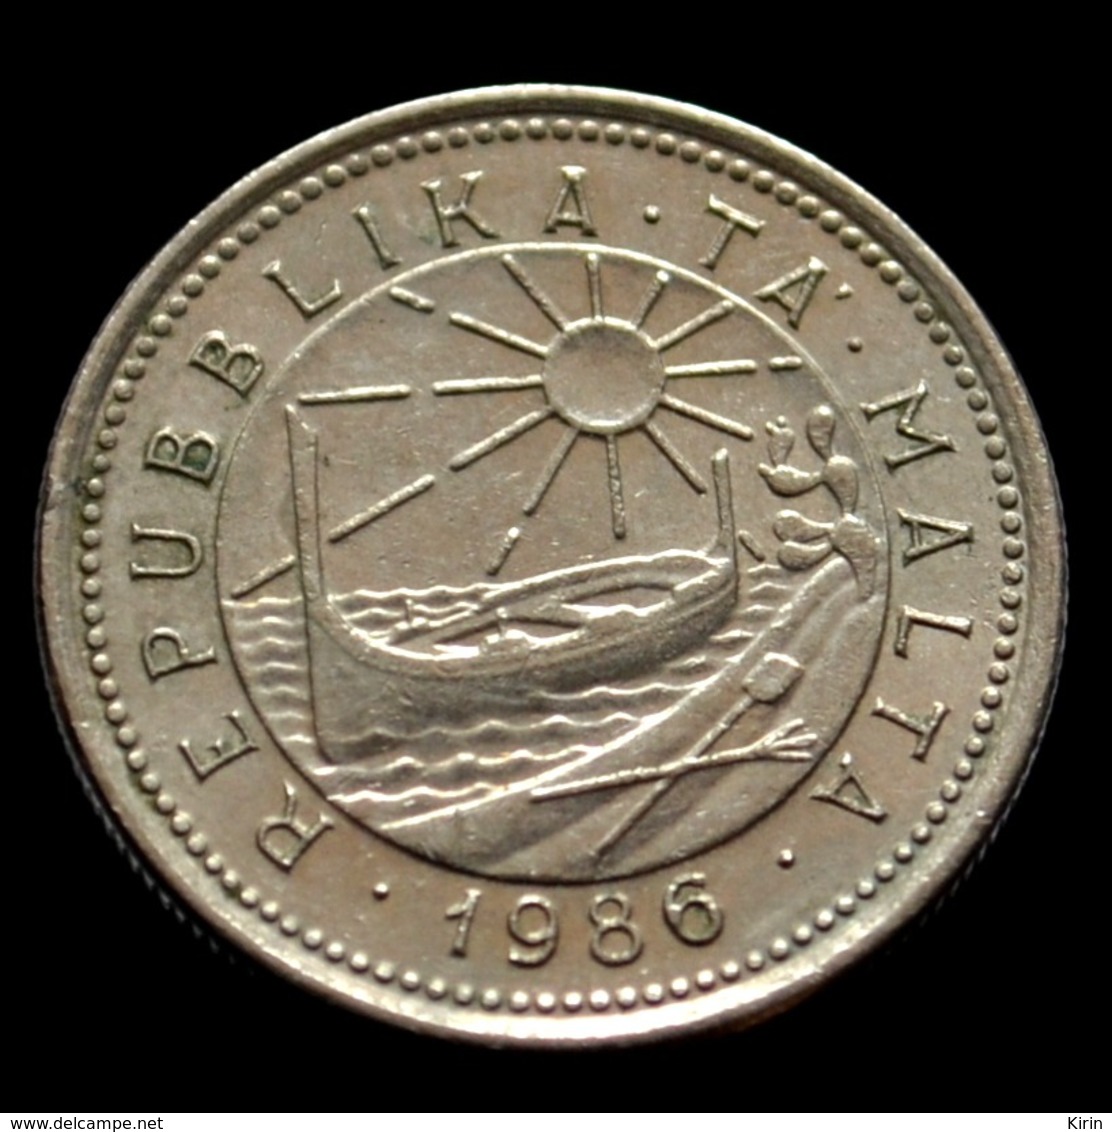 Malta 2 Cents 1986. Fishing Boat Coin. Km79 - Malta